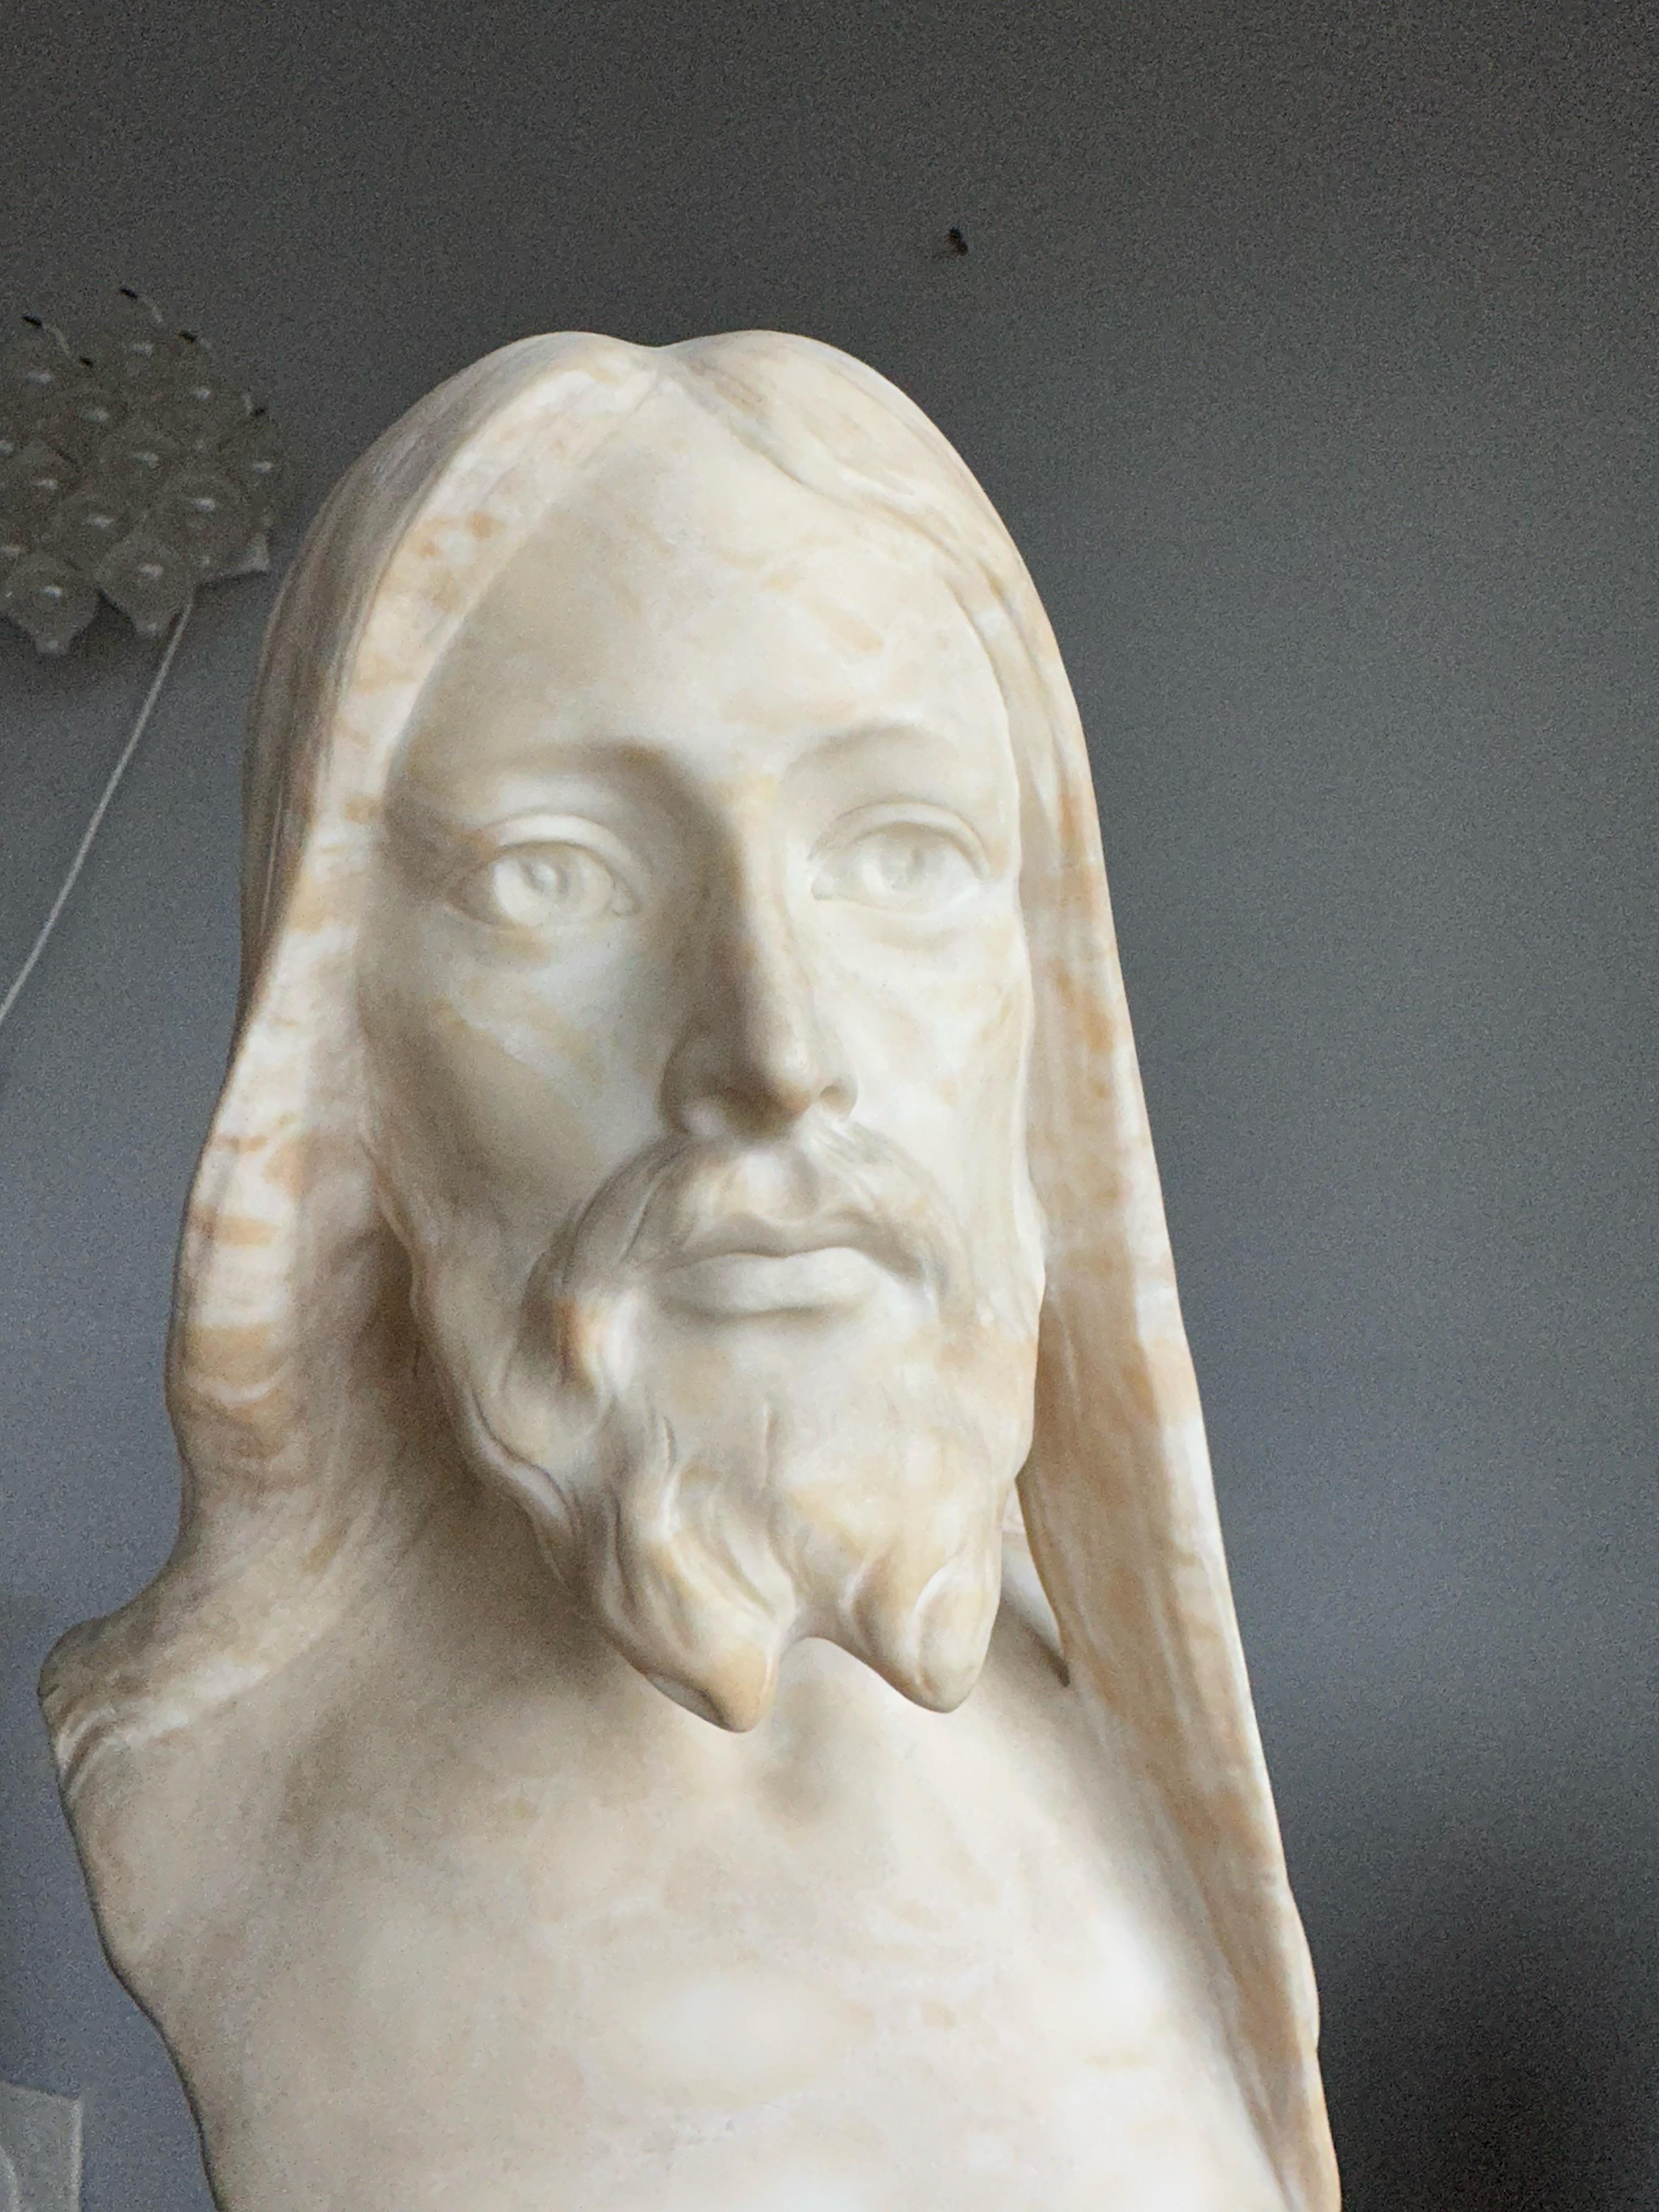 Arts and Crafts Antique, Early 1900 Large Hand Carved Alabaster Sculpture / Bust of Jesus Christ For Sale